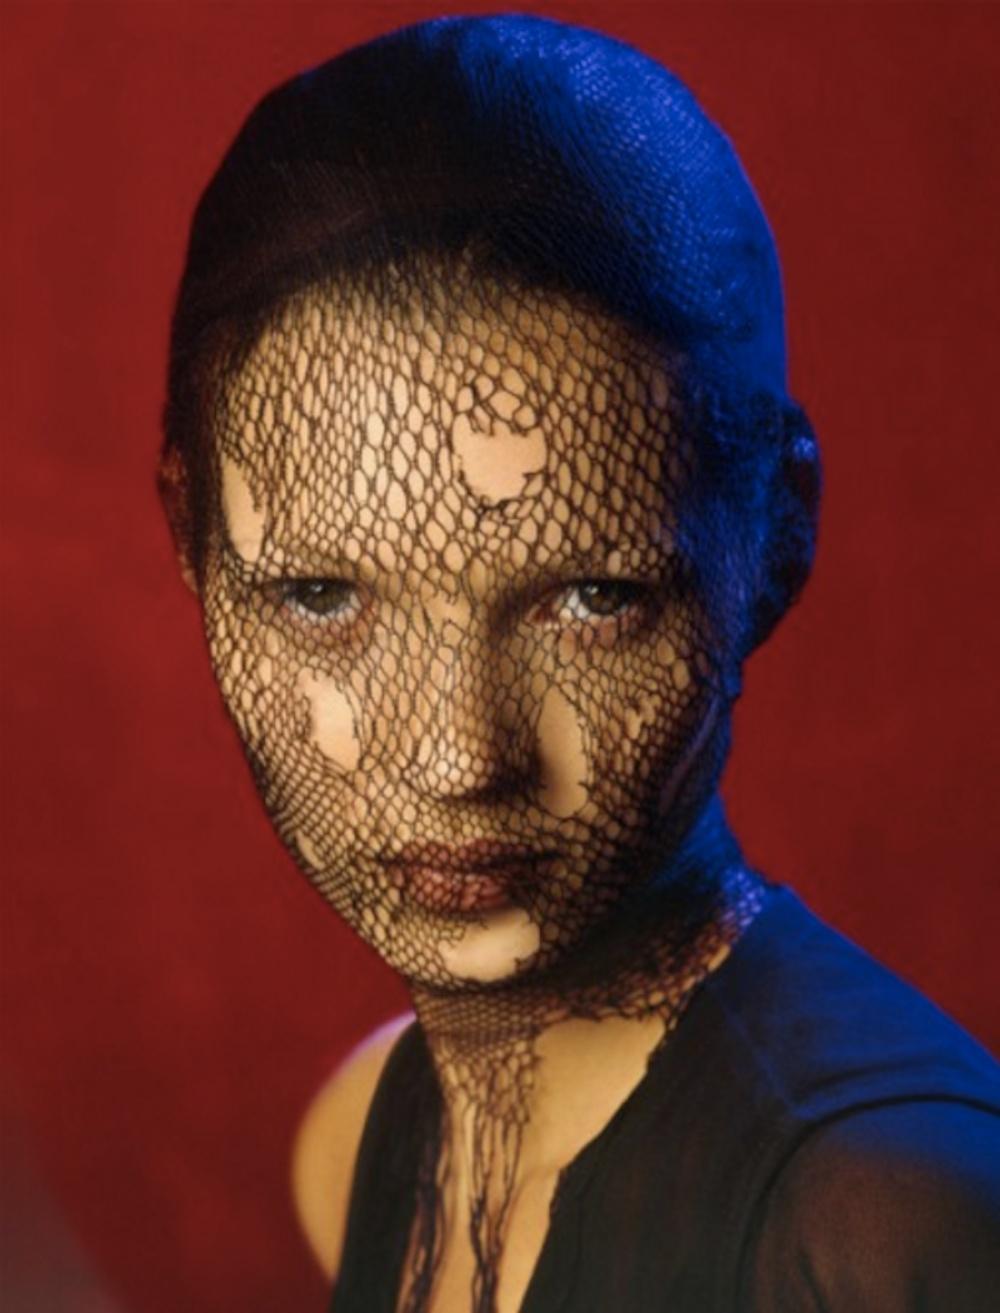 Kate Moss Veil (color) – Albert Watson, Woman, Portrait, Erotic, Celebrity, Art